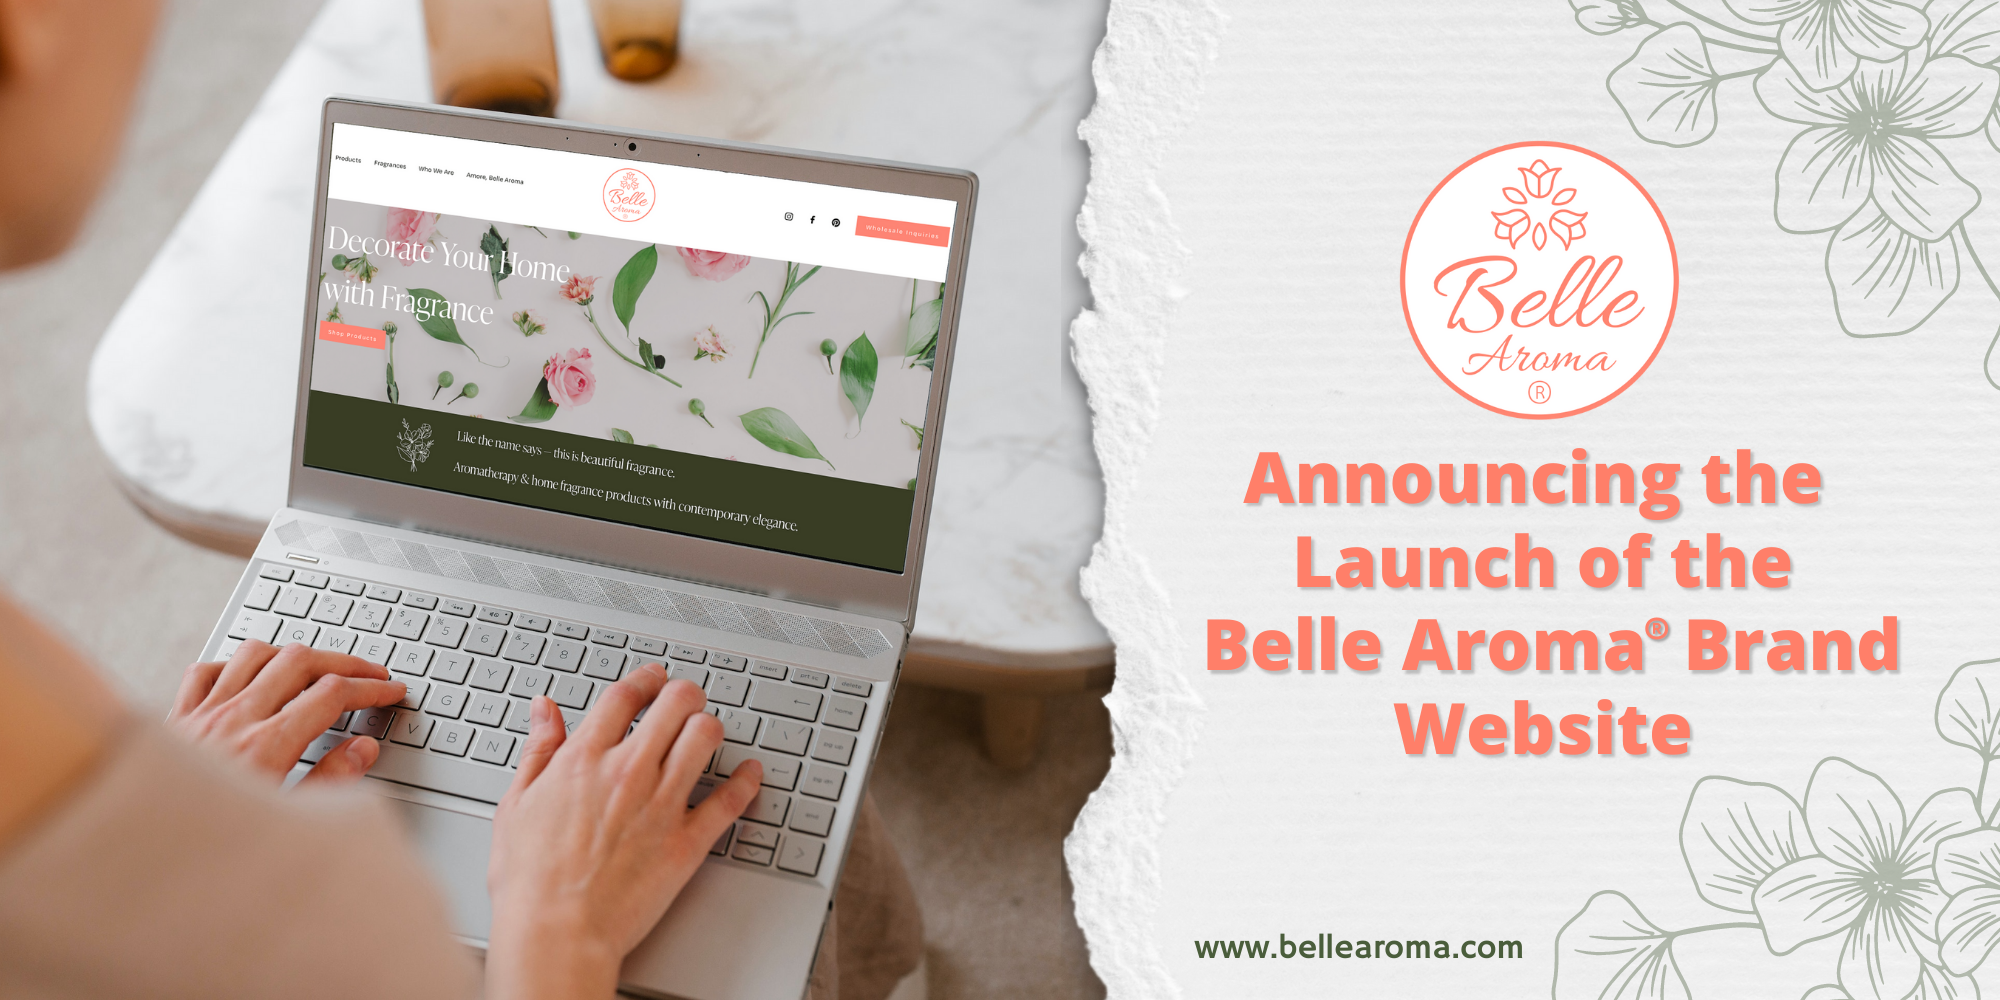 Belle Aroma website press release image